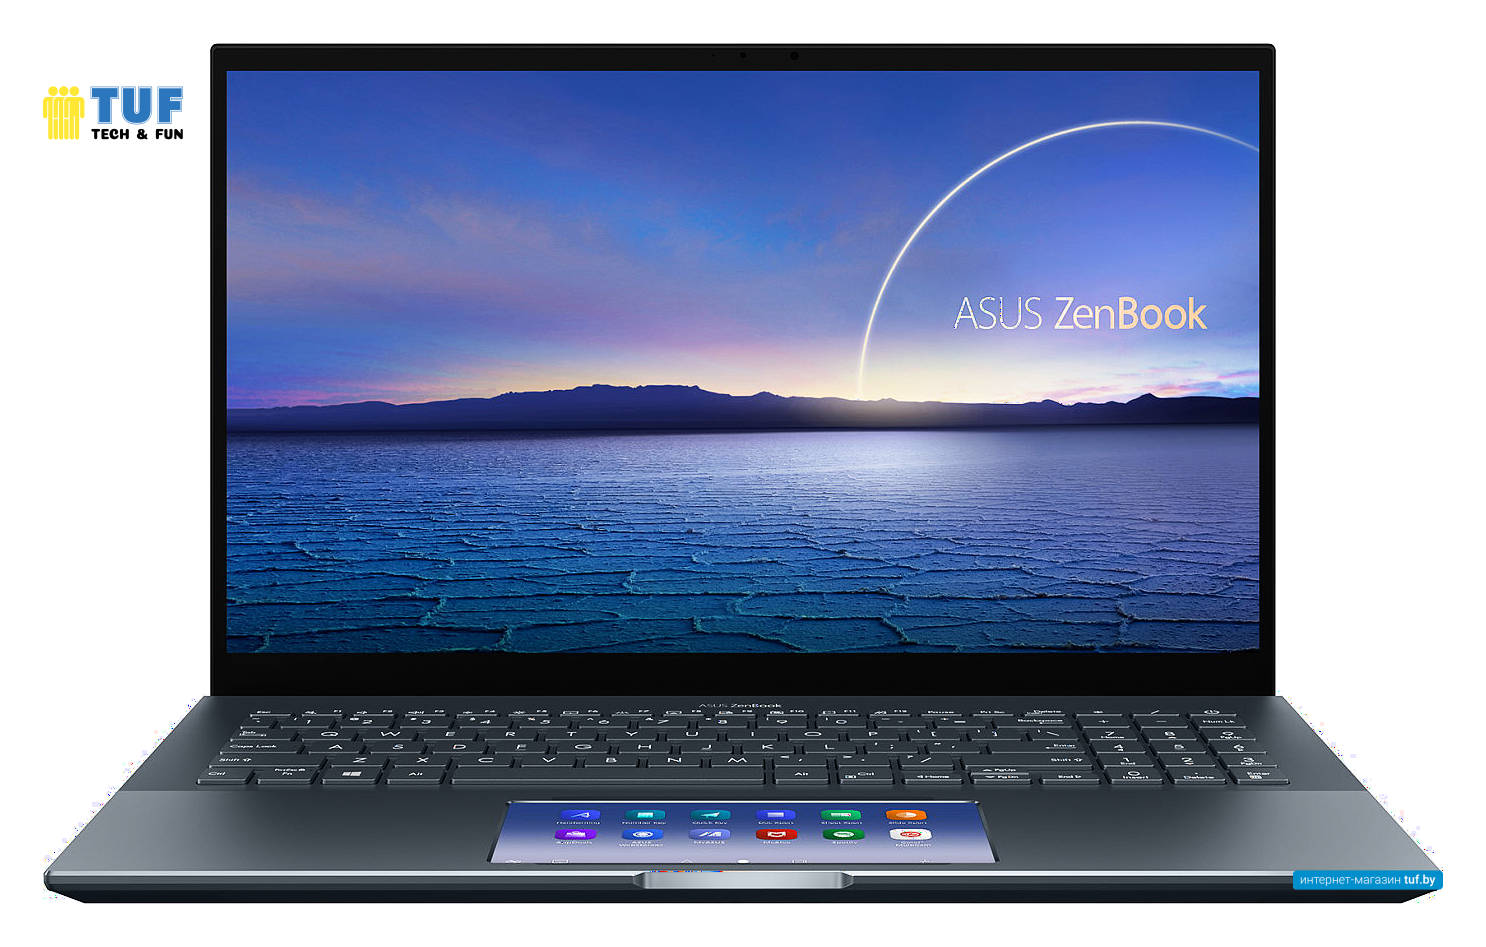 Ноутбук ASUS ZenBook Pro 15 UX535LH-BO126T